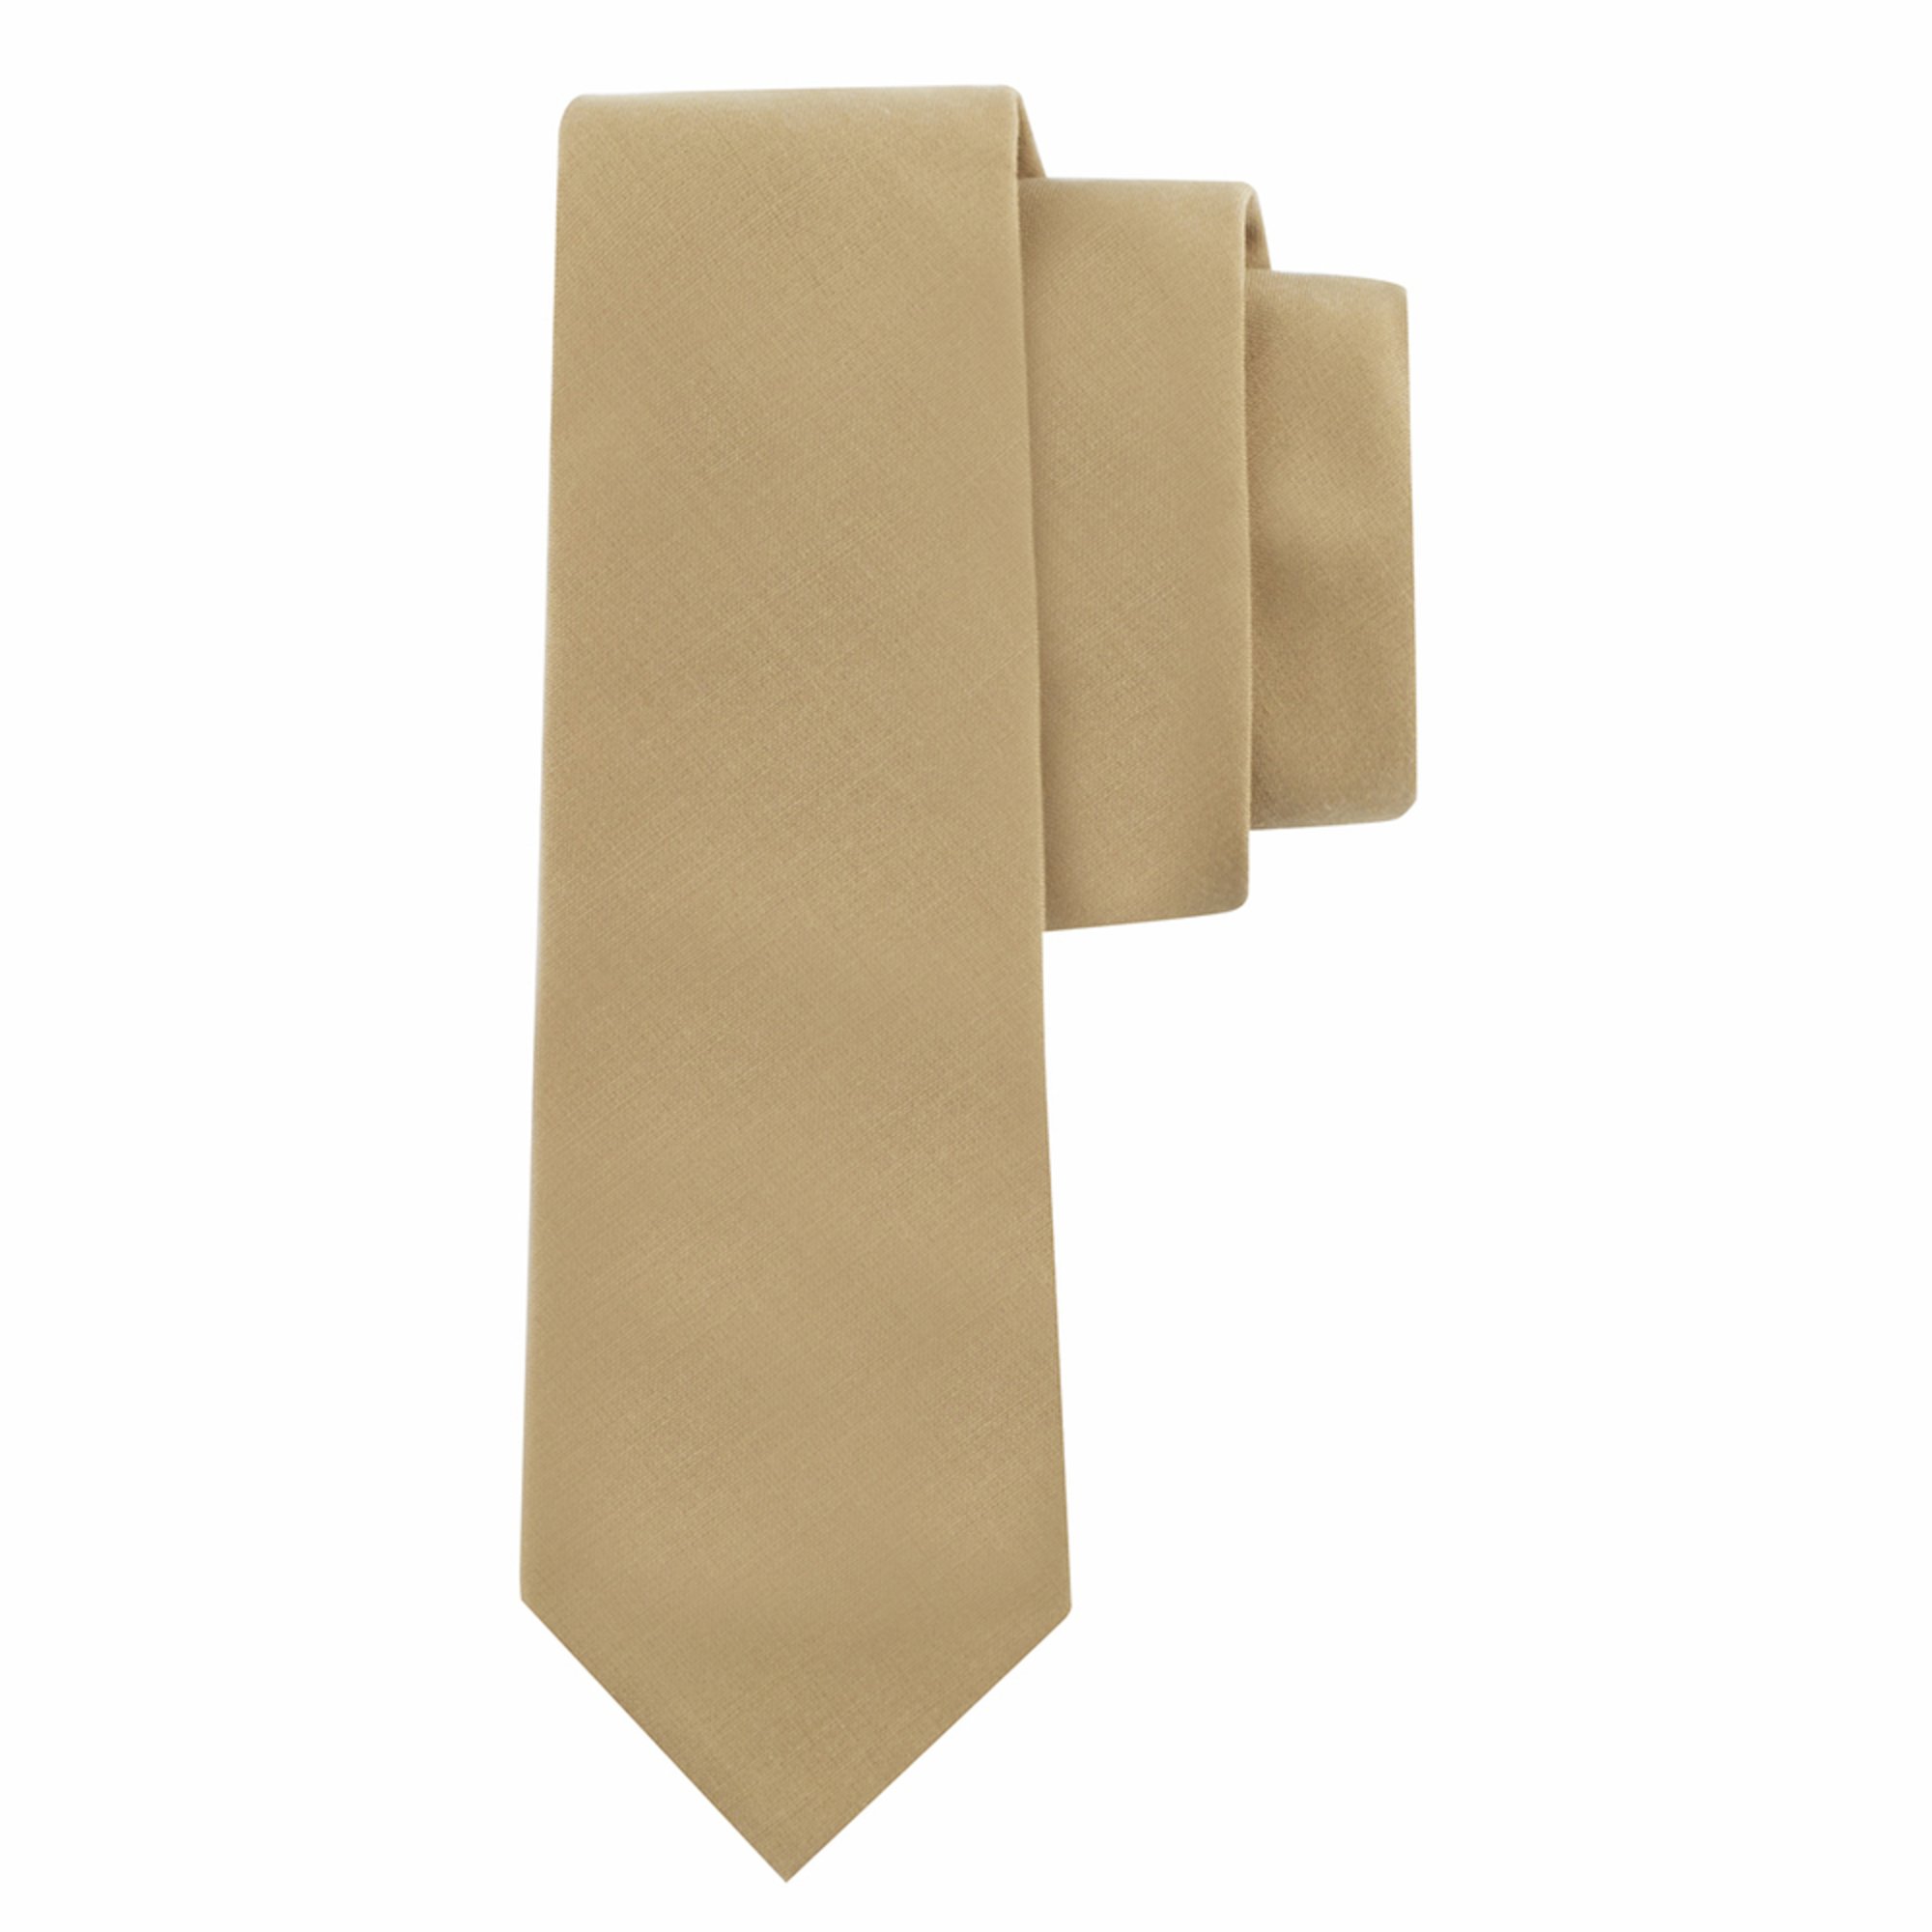 Usmc Khaki Necktie, Four-in-hand | Neckwear | Military - Shop Your Navy ...